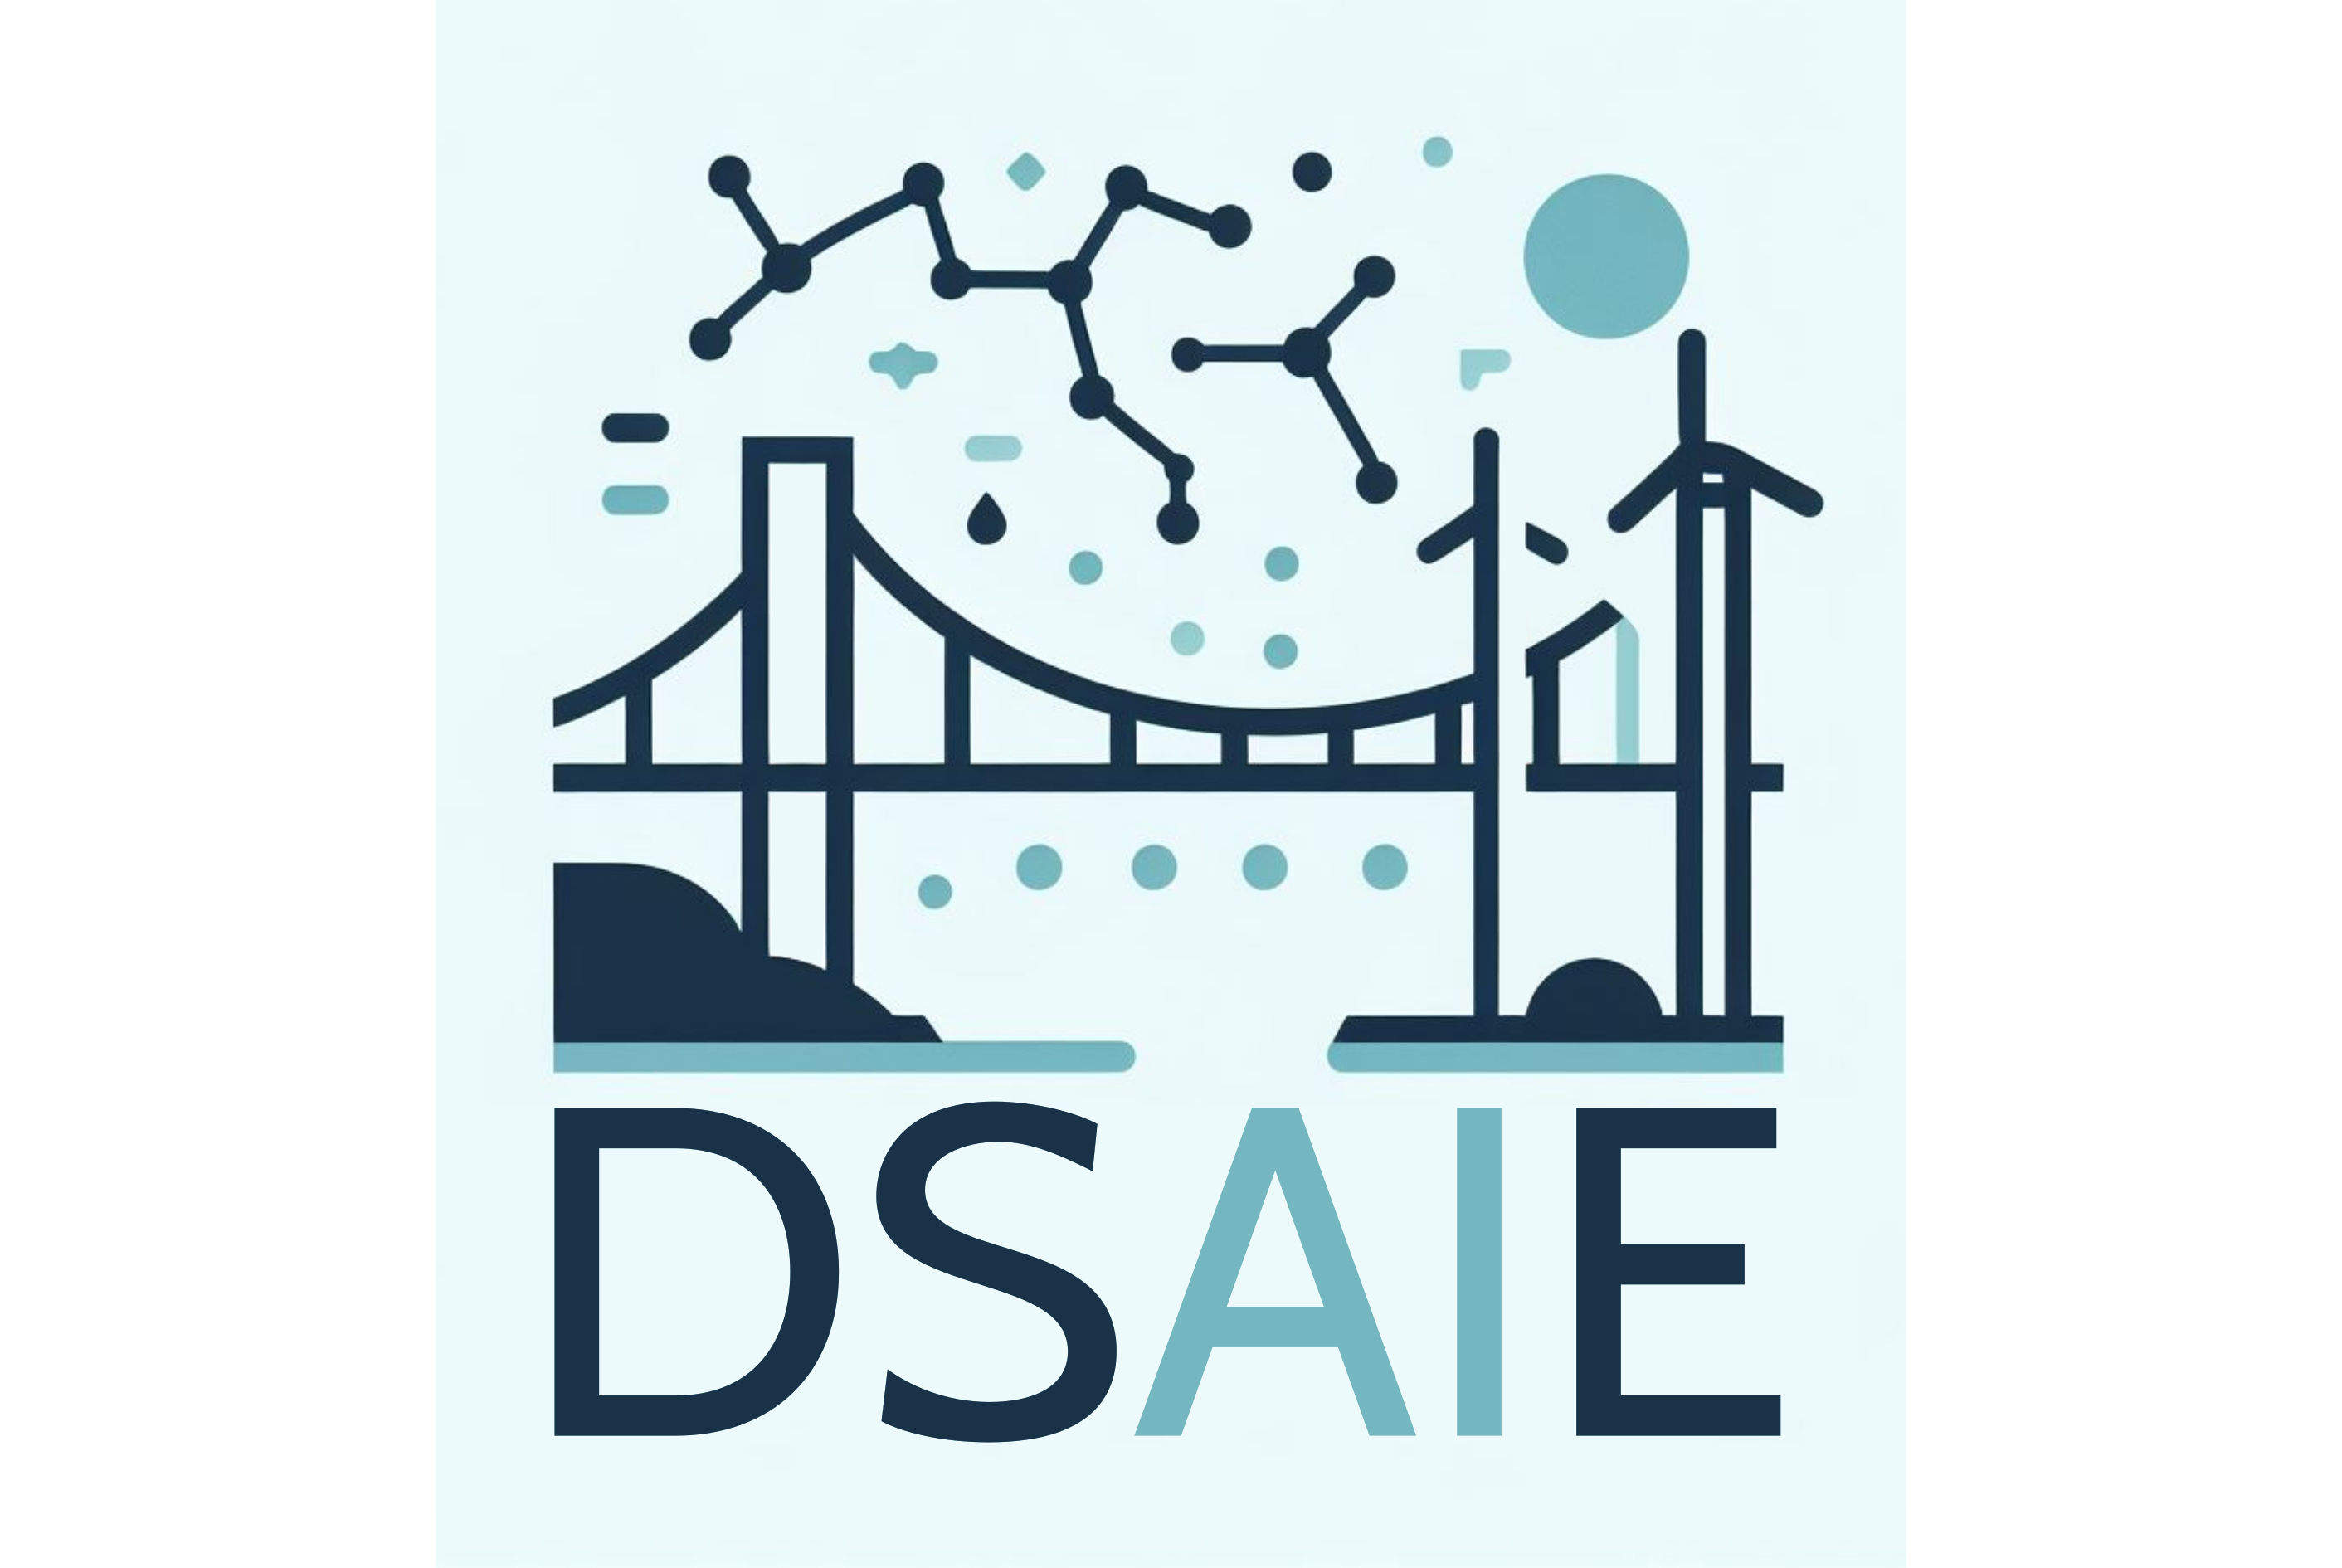 DSAIE logo